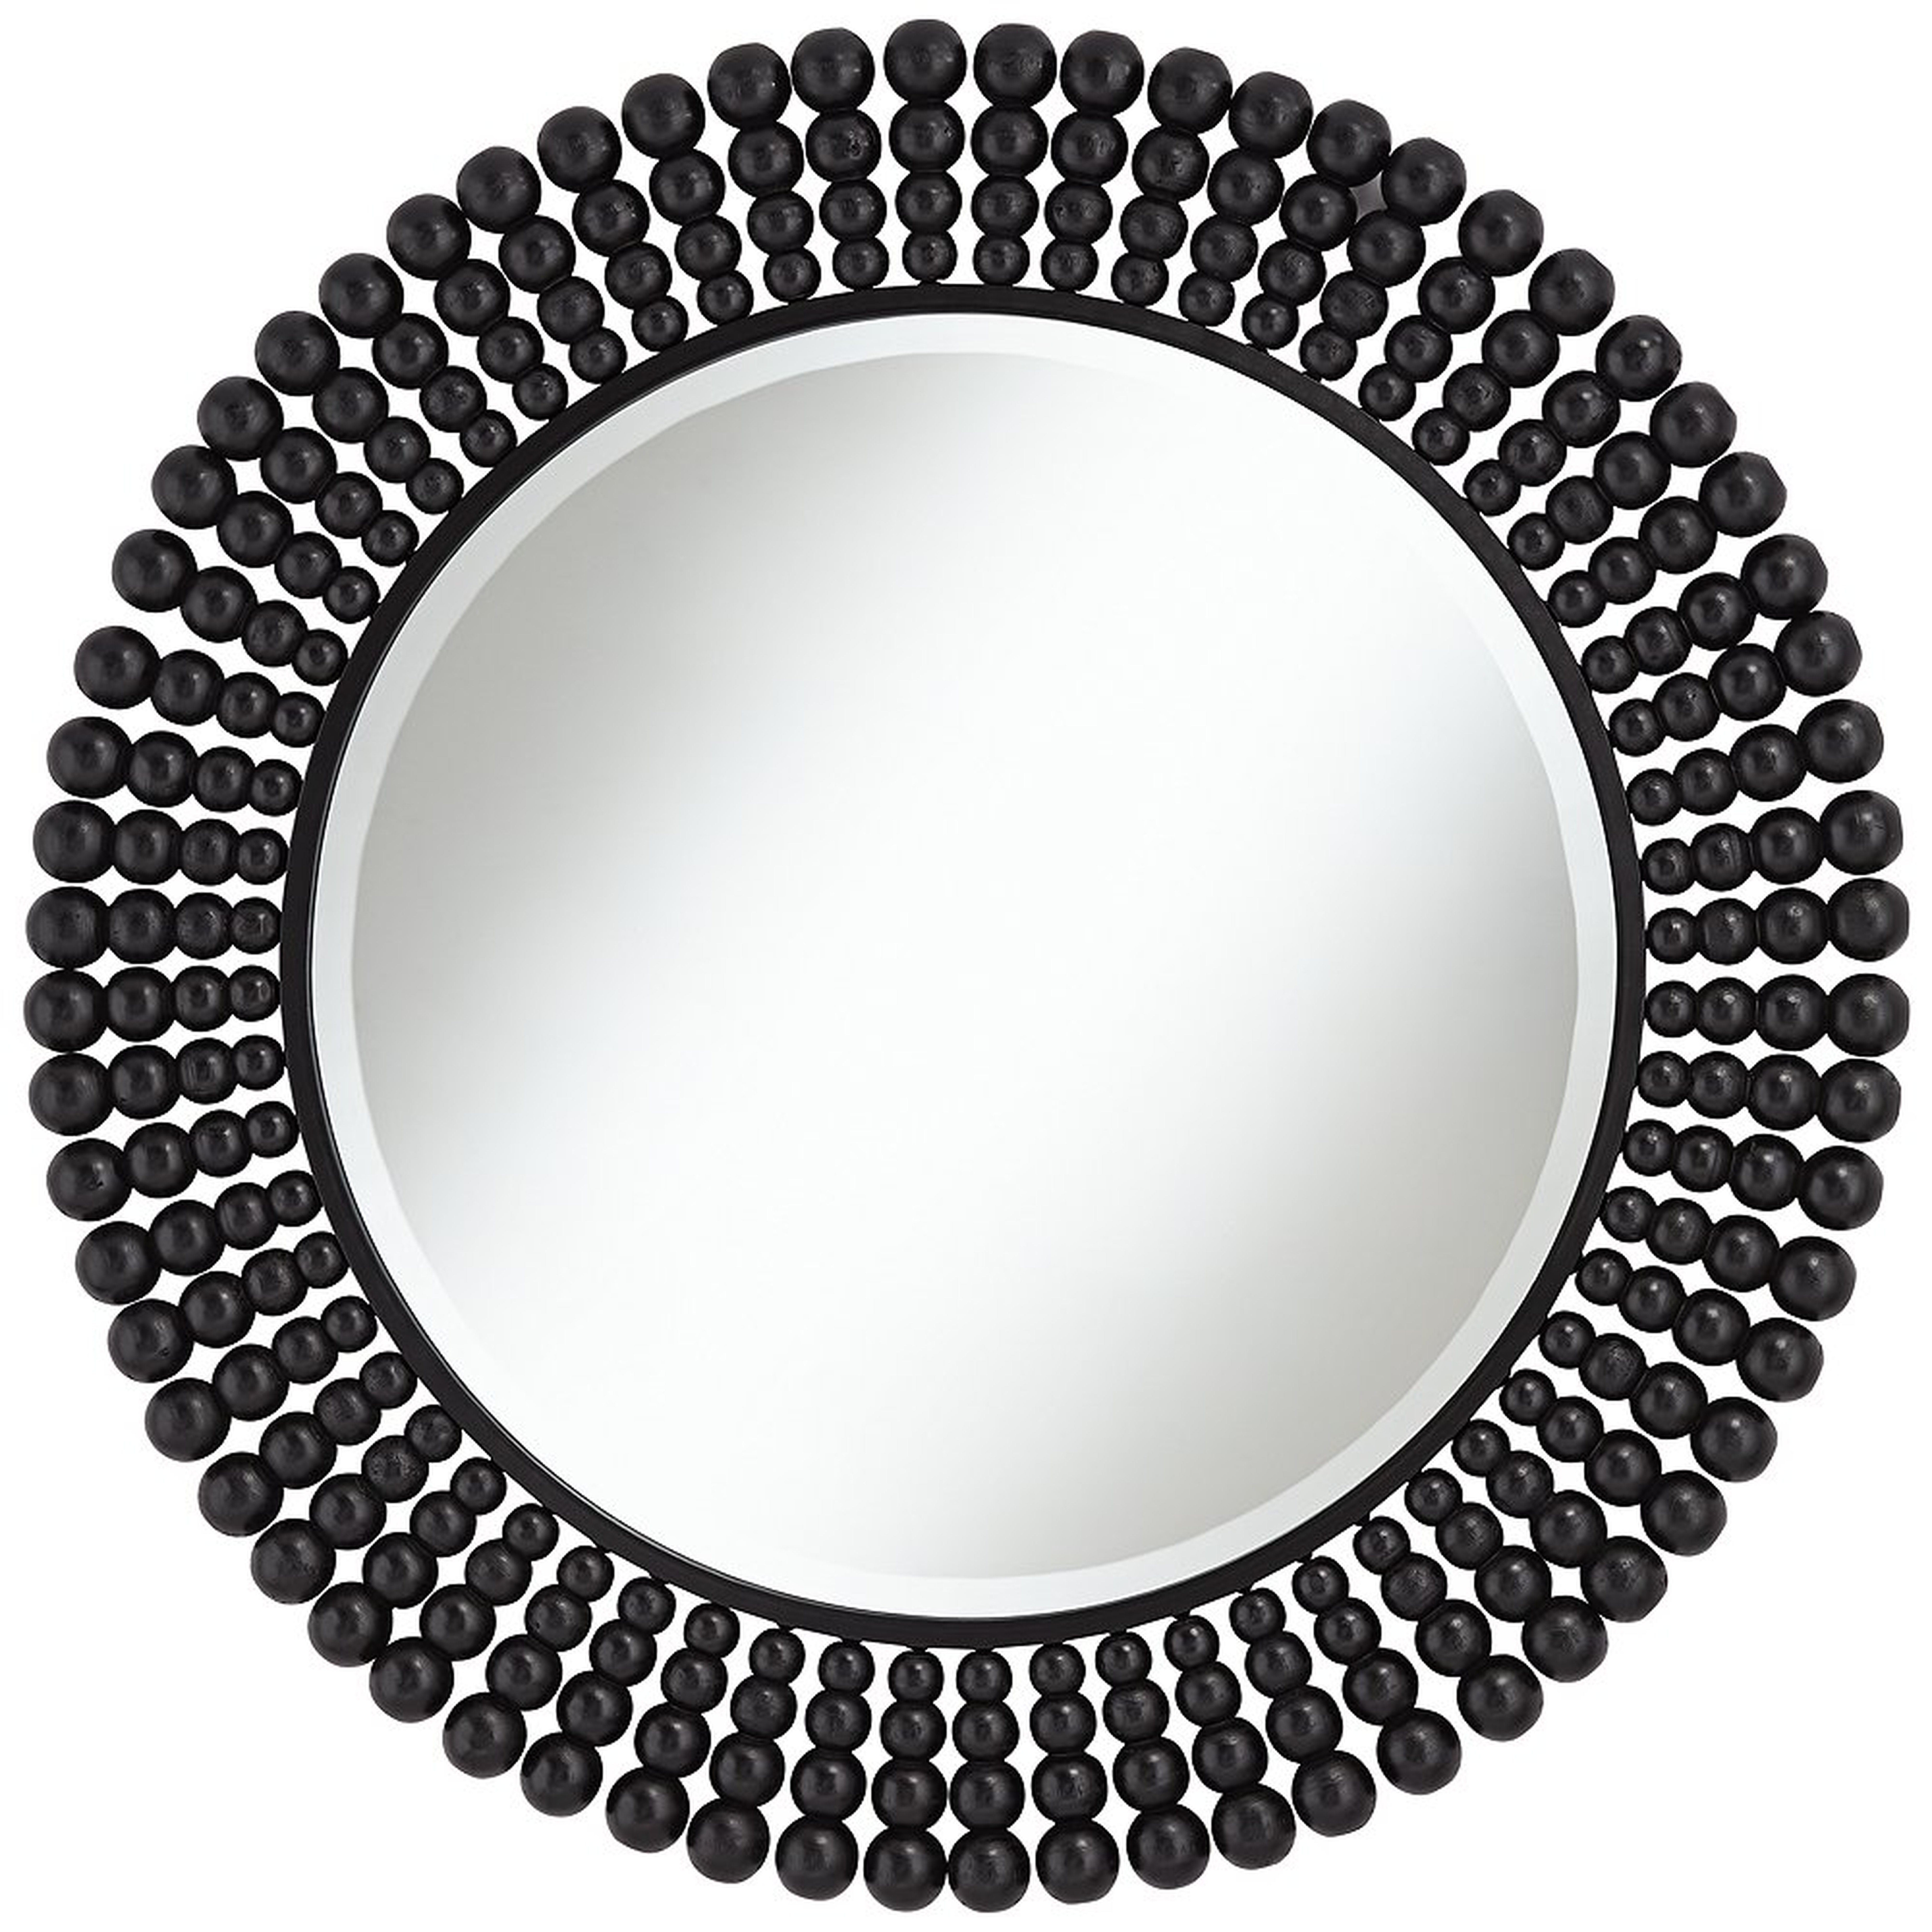 Ellisha 34 3/4" Round Black Wood Pearl Wall Mirror - Style # 71H65 - Lamps Plus